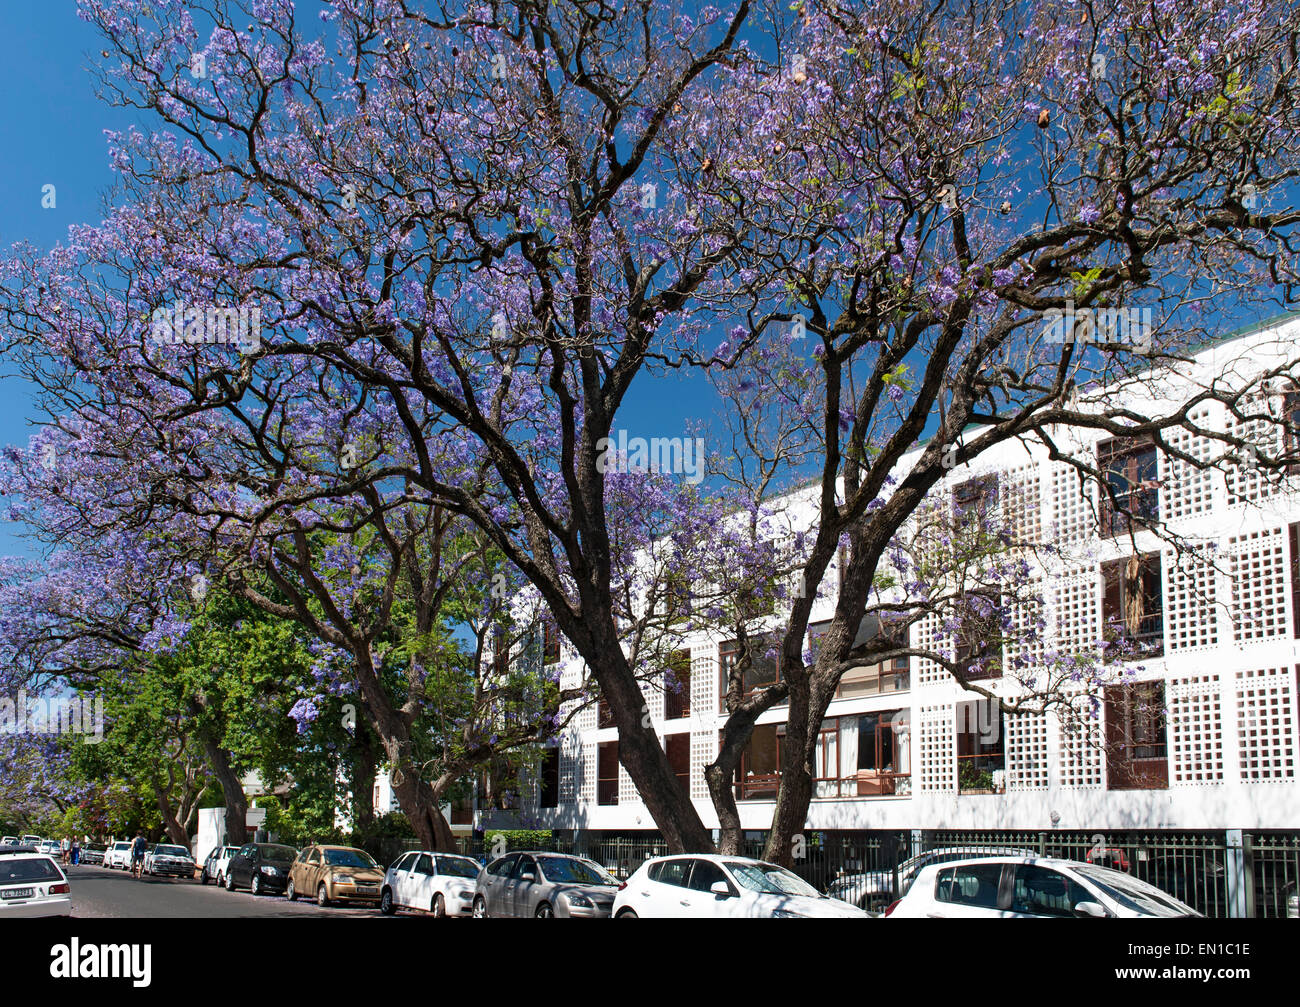 Jacaranda-Bäume in voller Blüte Helderberg unterwegs in der Stadt Stellenbosch in der Western Cape in Südafrika. Stockfoto